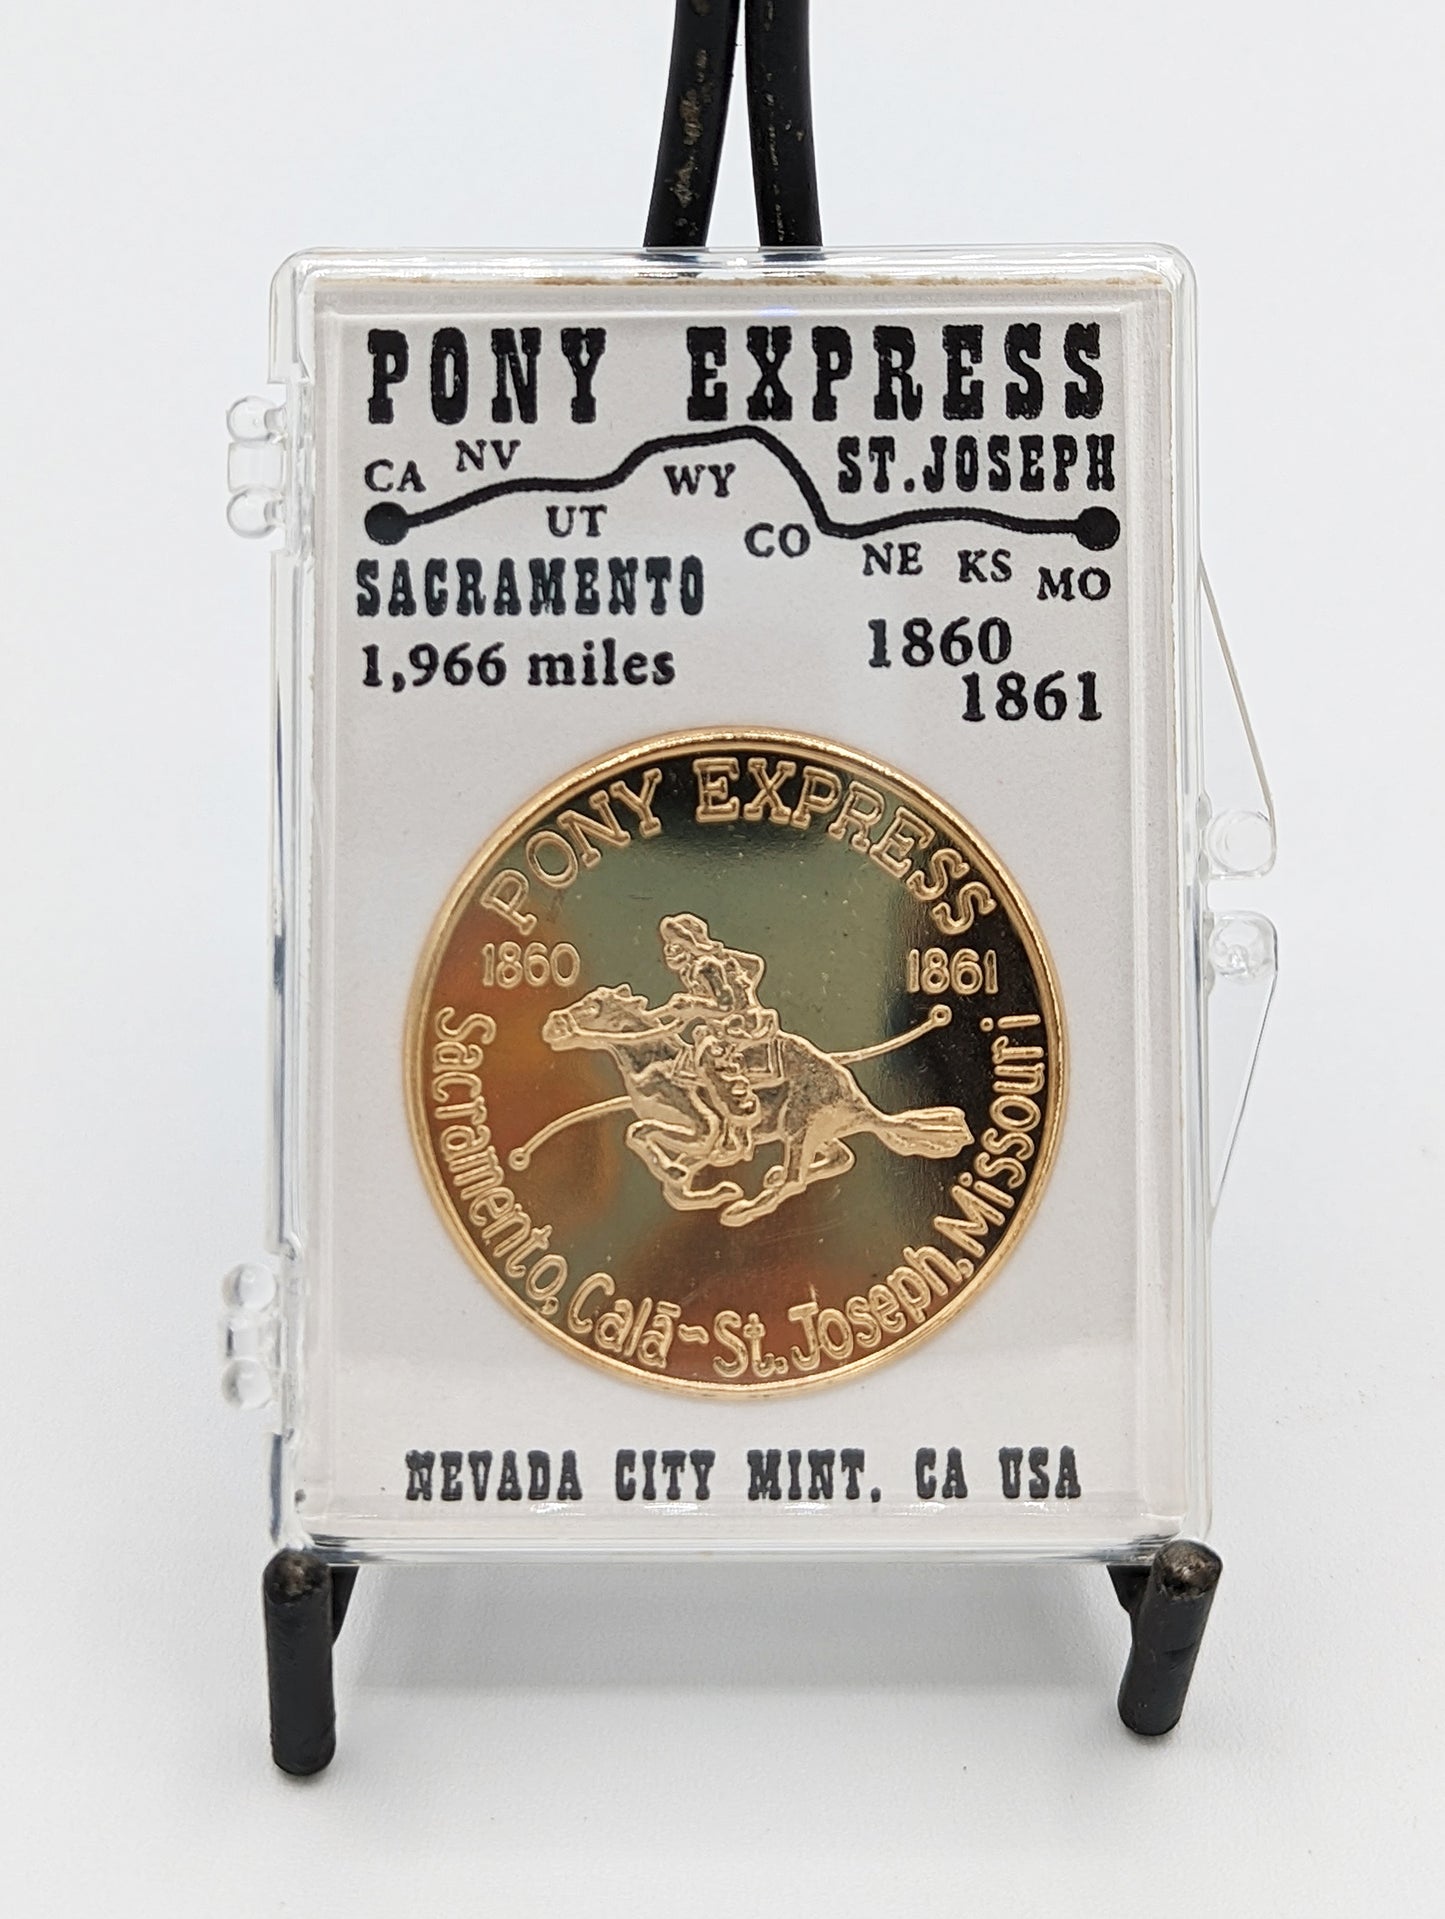 Pony Express Commemorative Coin